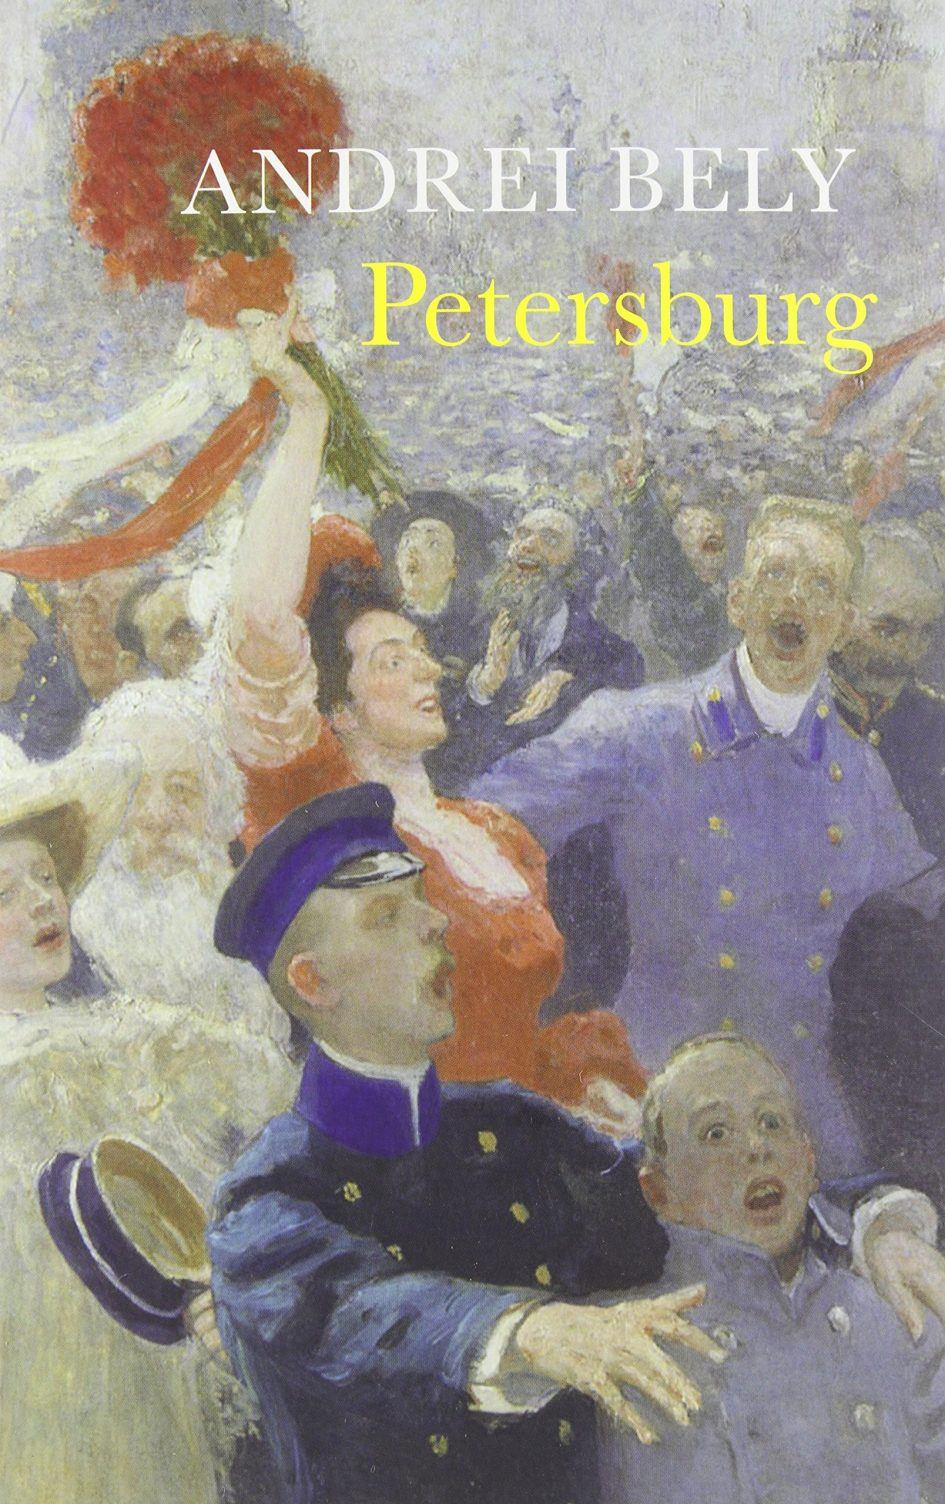 Petersburg by Andrei Bely